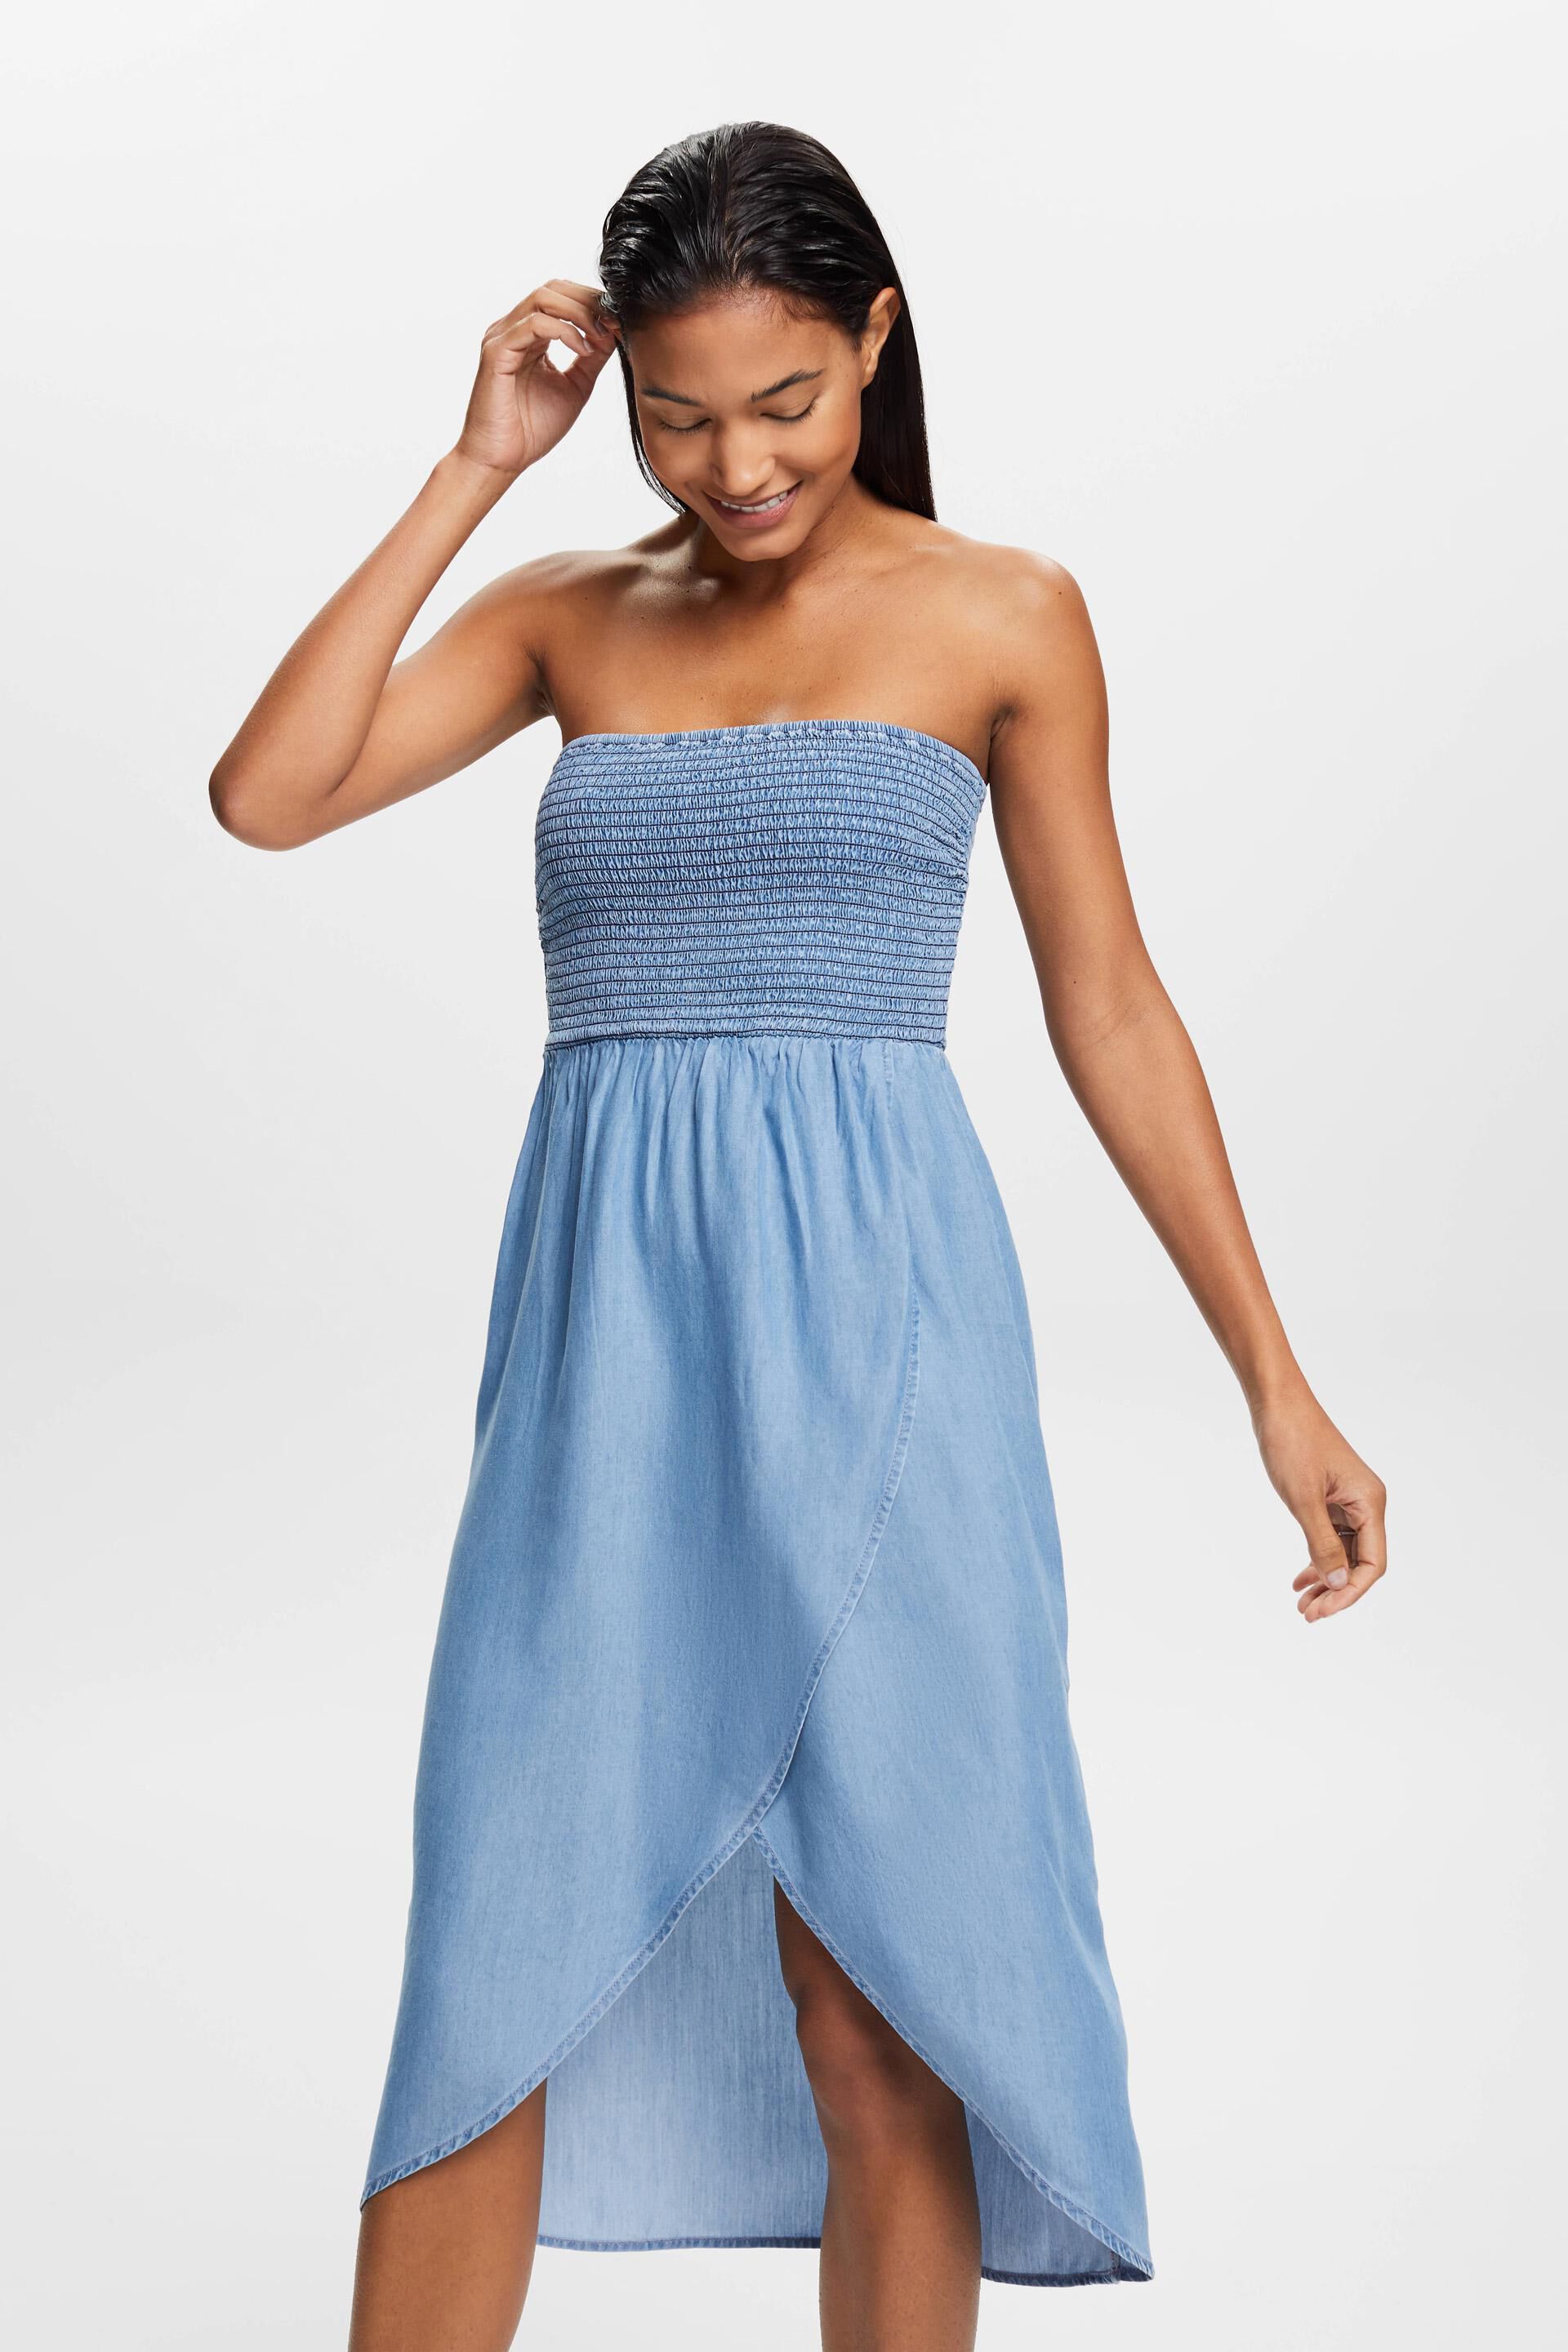 Urban Outfitters 90s Incognito Denim Tube Strapless Mini Dress Size Medium  | eBay